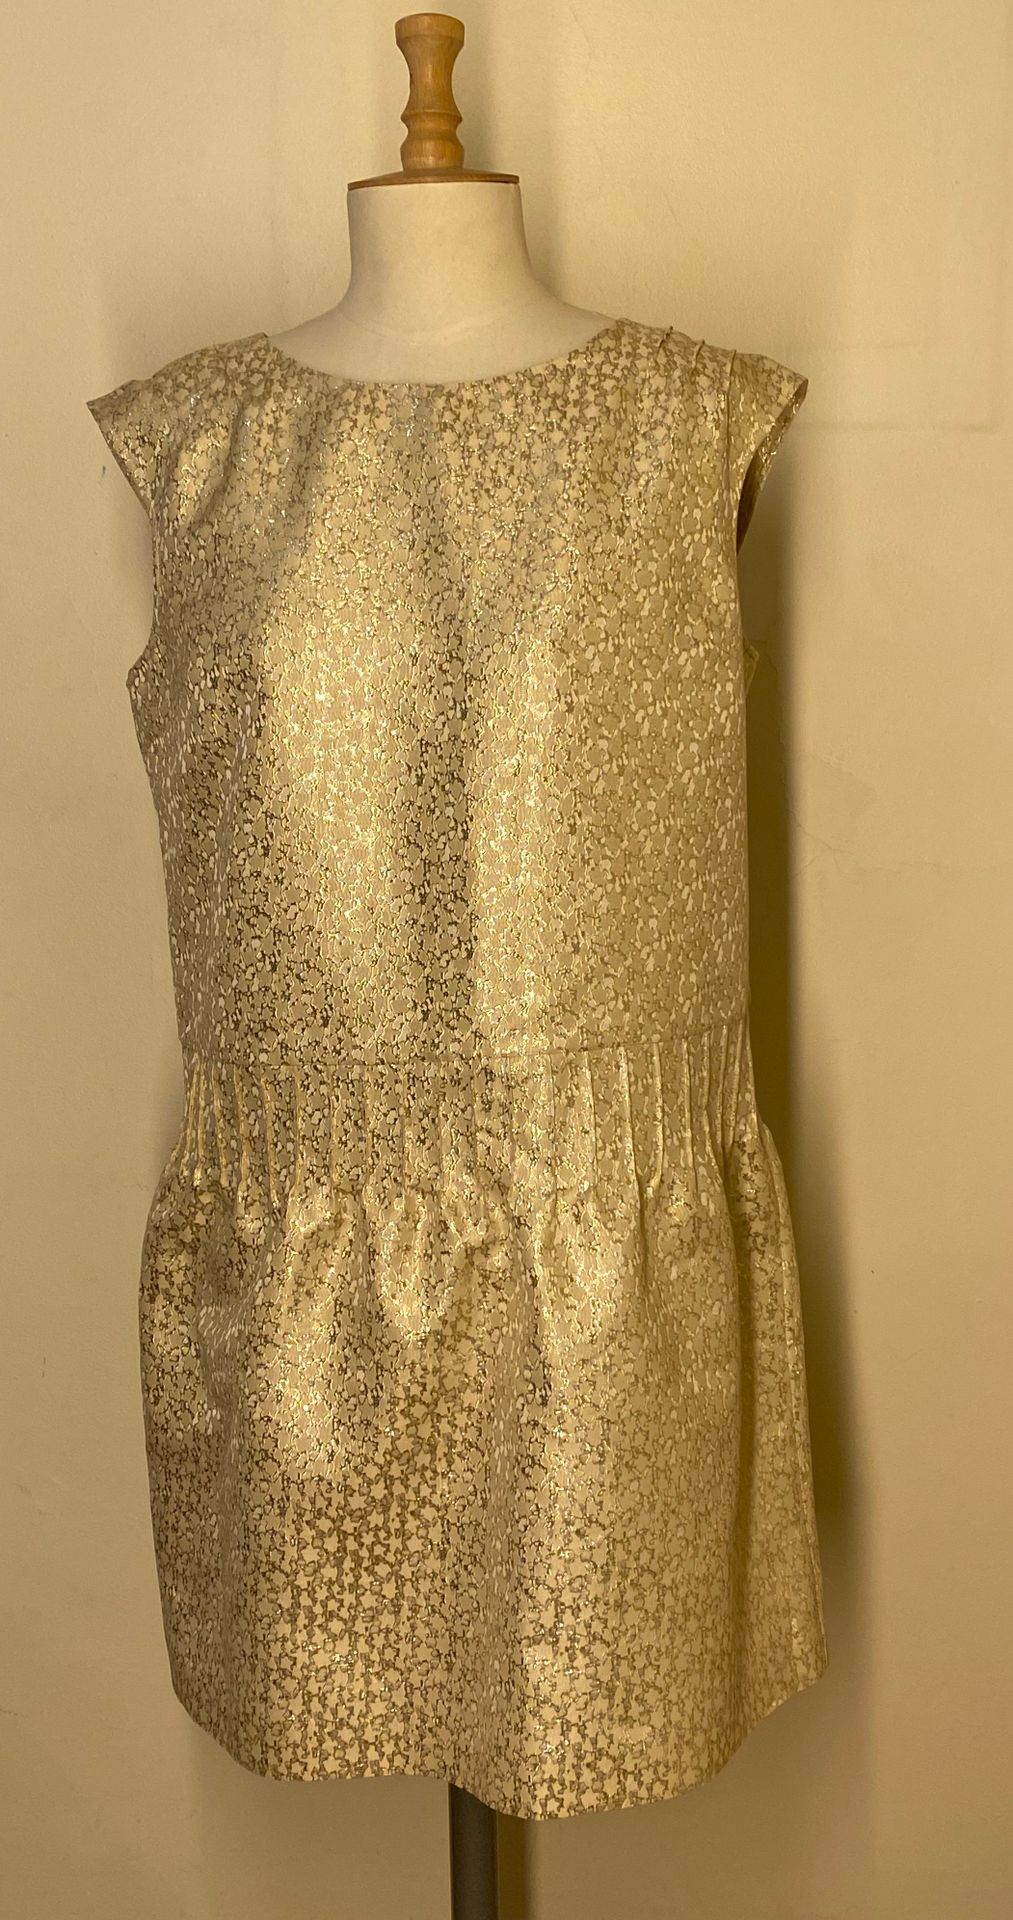 Null A.P.C巴黎夫人街

带金色装饰的织物连衣裙。尺寸L

(状况良好)



拍卖会将于2021年12月20日（星期一）在巴黎第十五区举行，只接受预约&hellip;